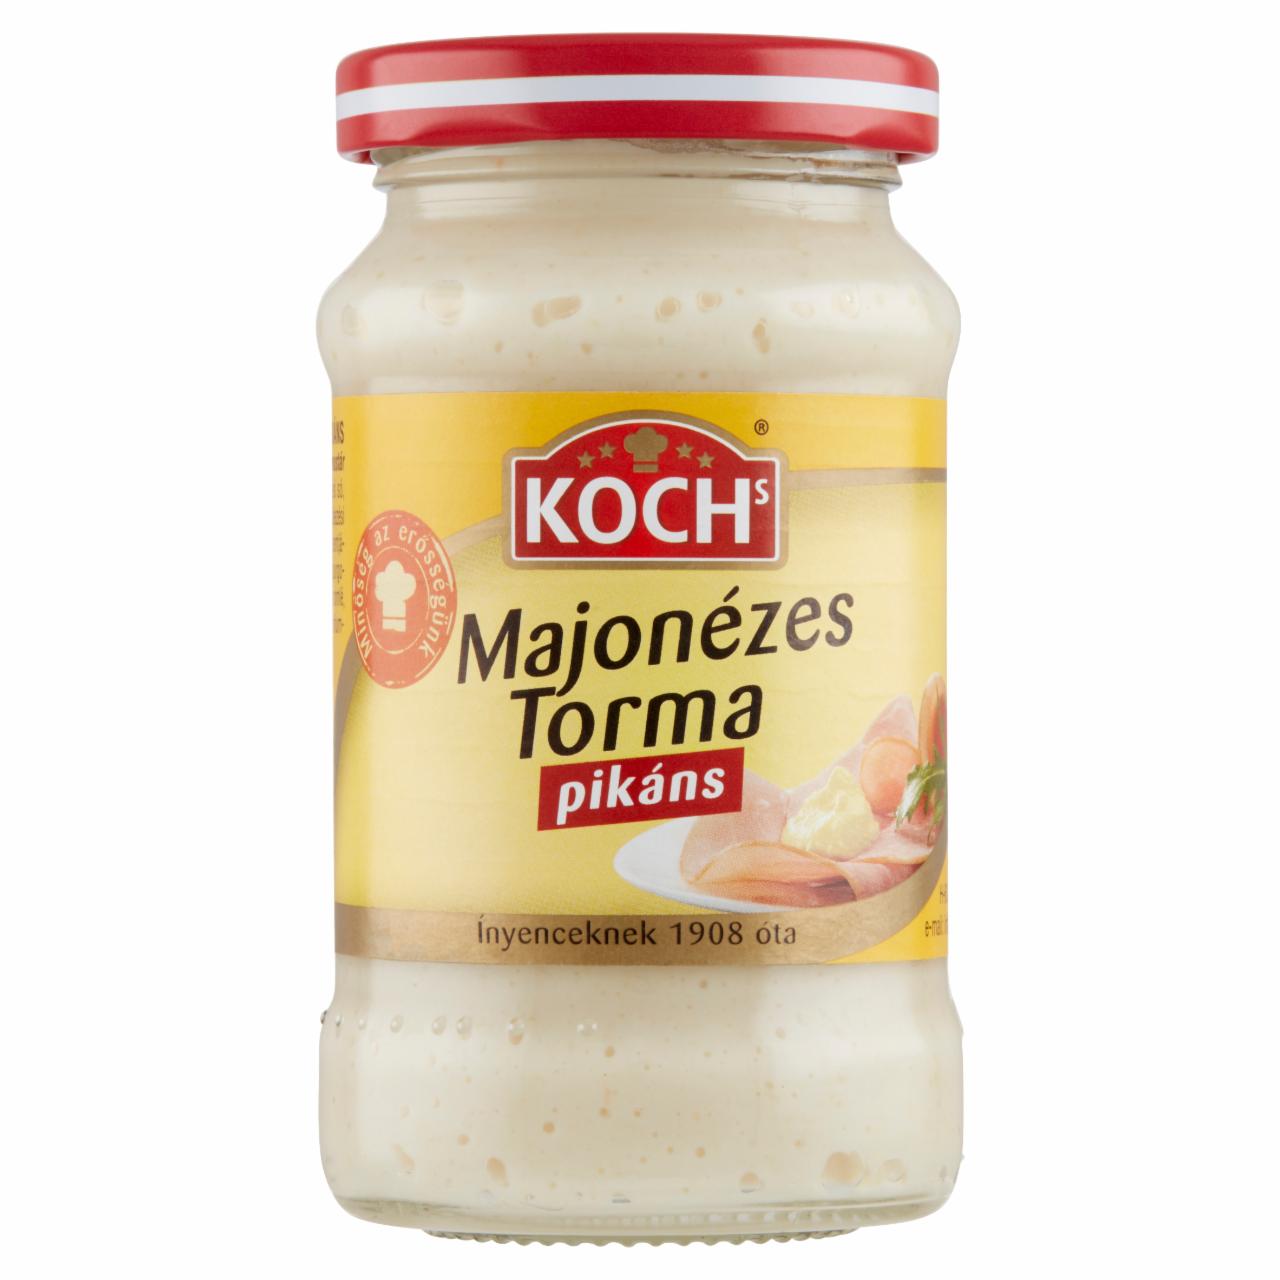 Képek - Koch's pikáns majonézes torma 200 g